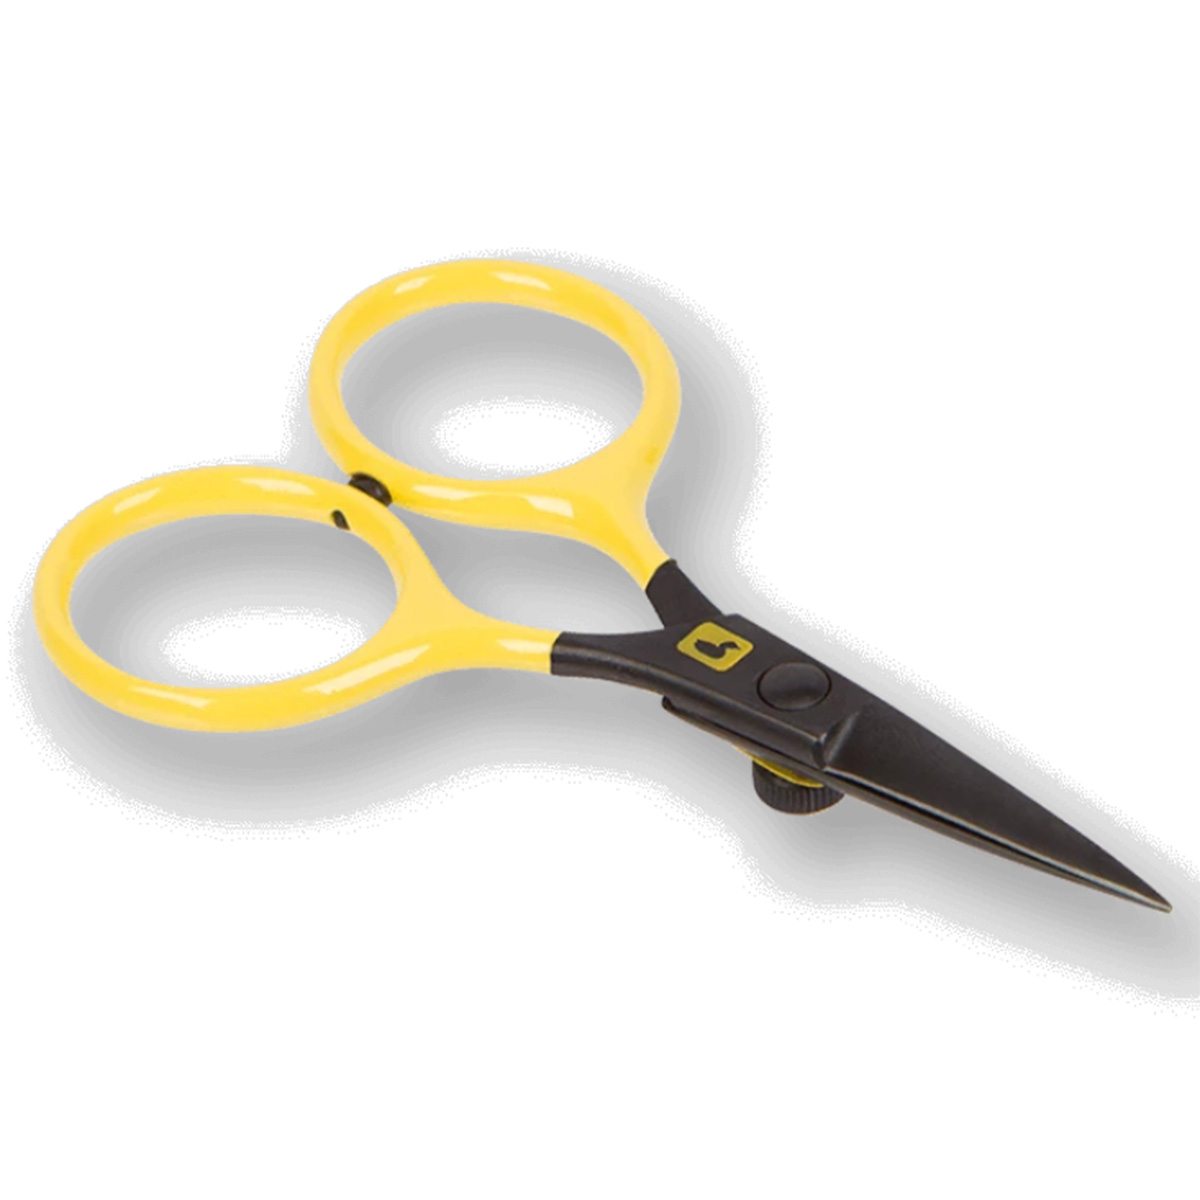 Loon Razor Scissor 4 inch